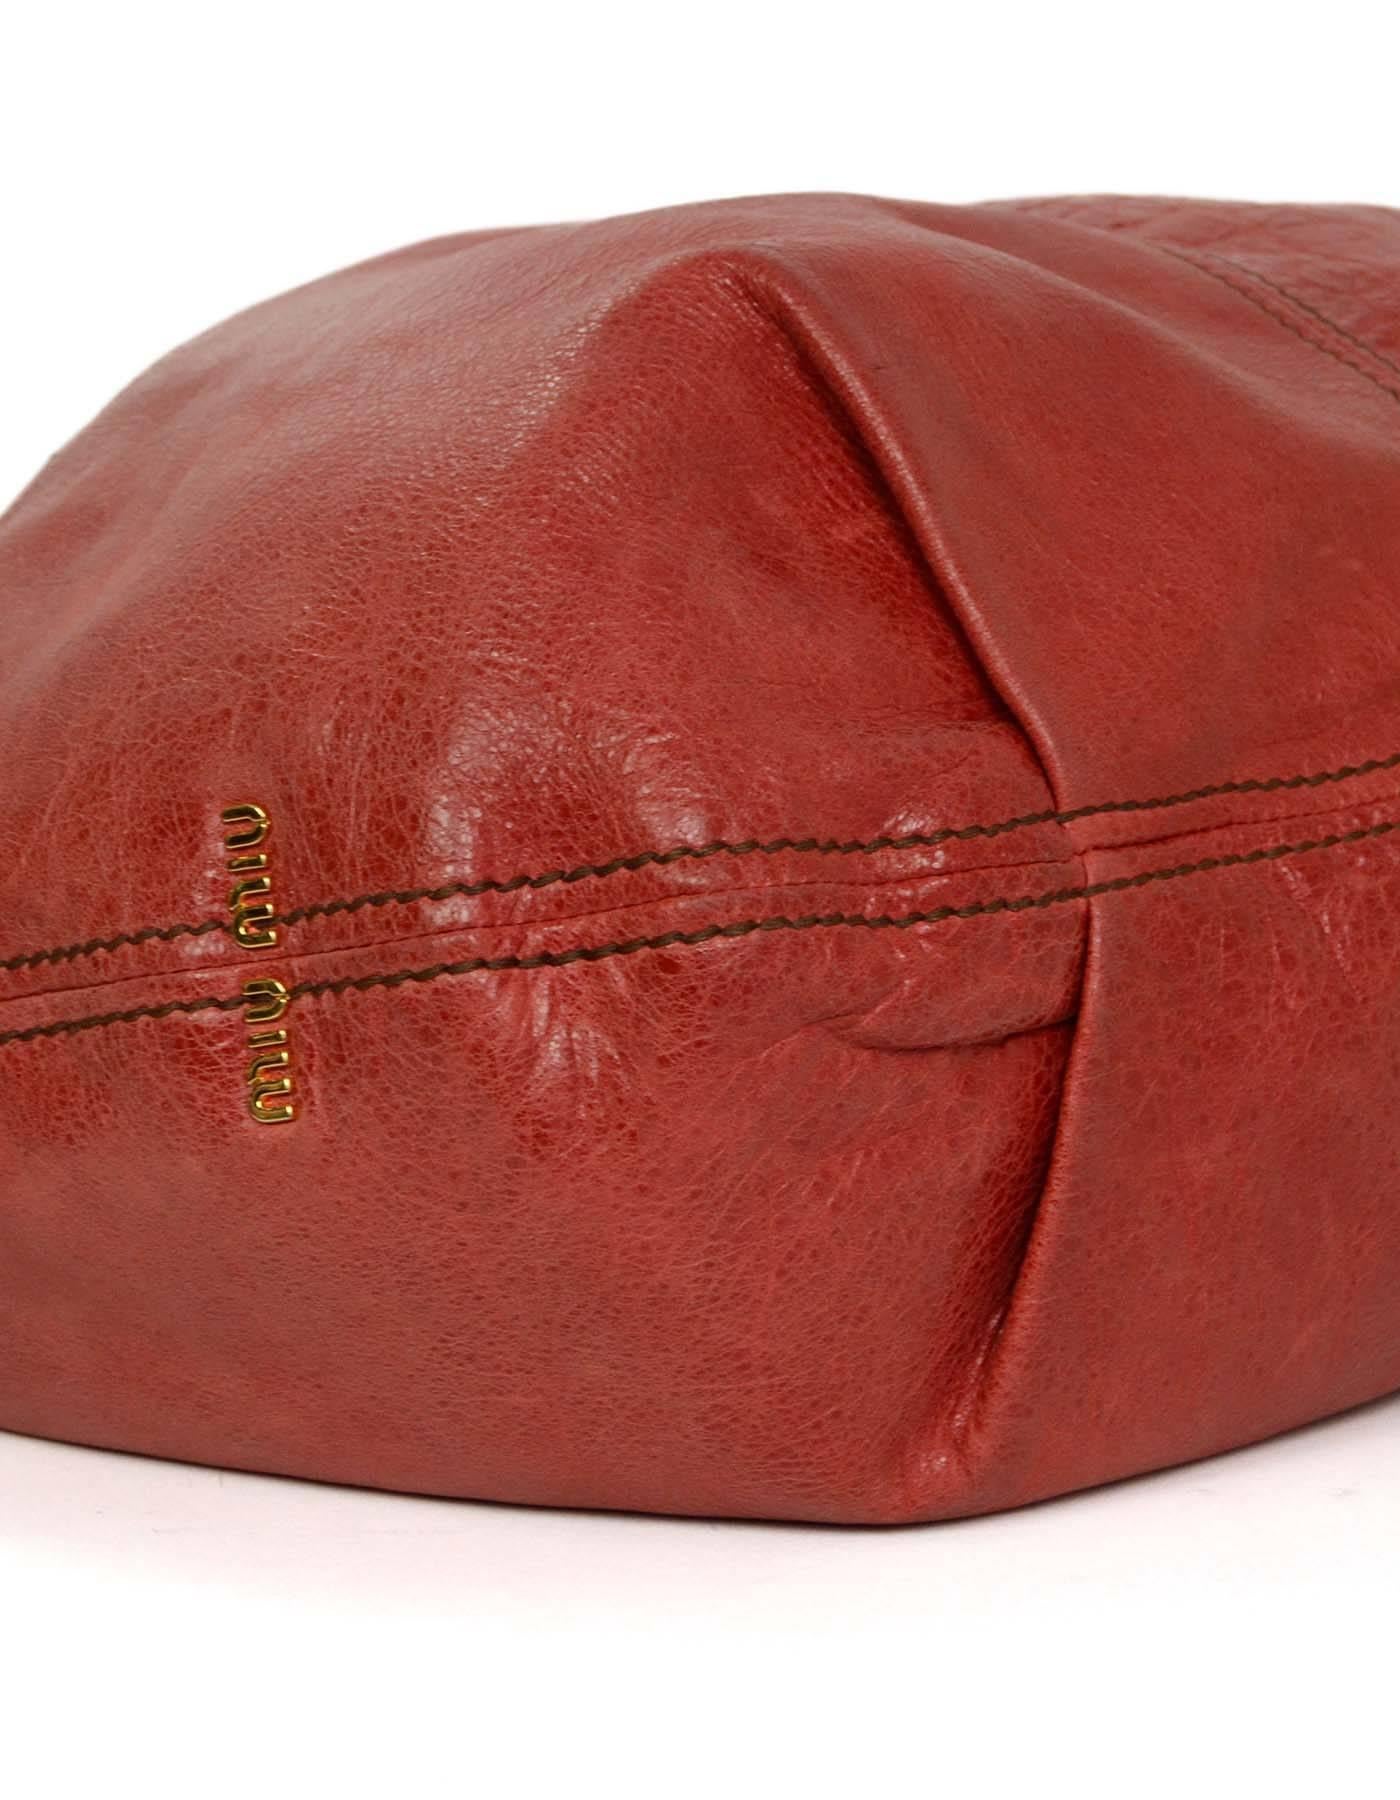 distressed madras bag